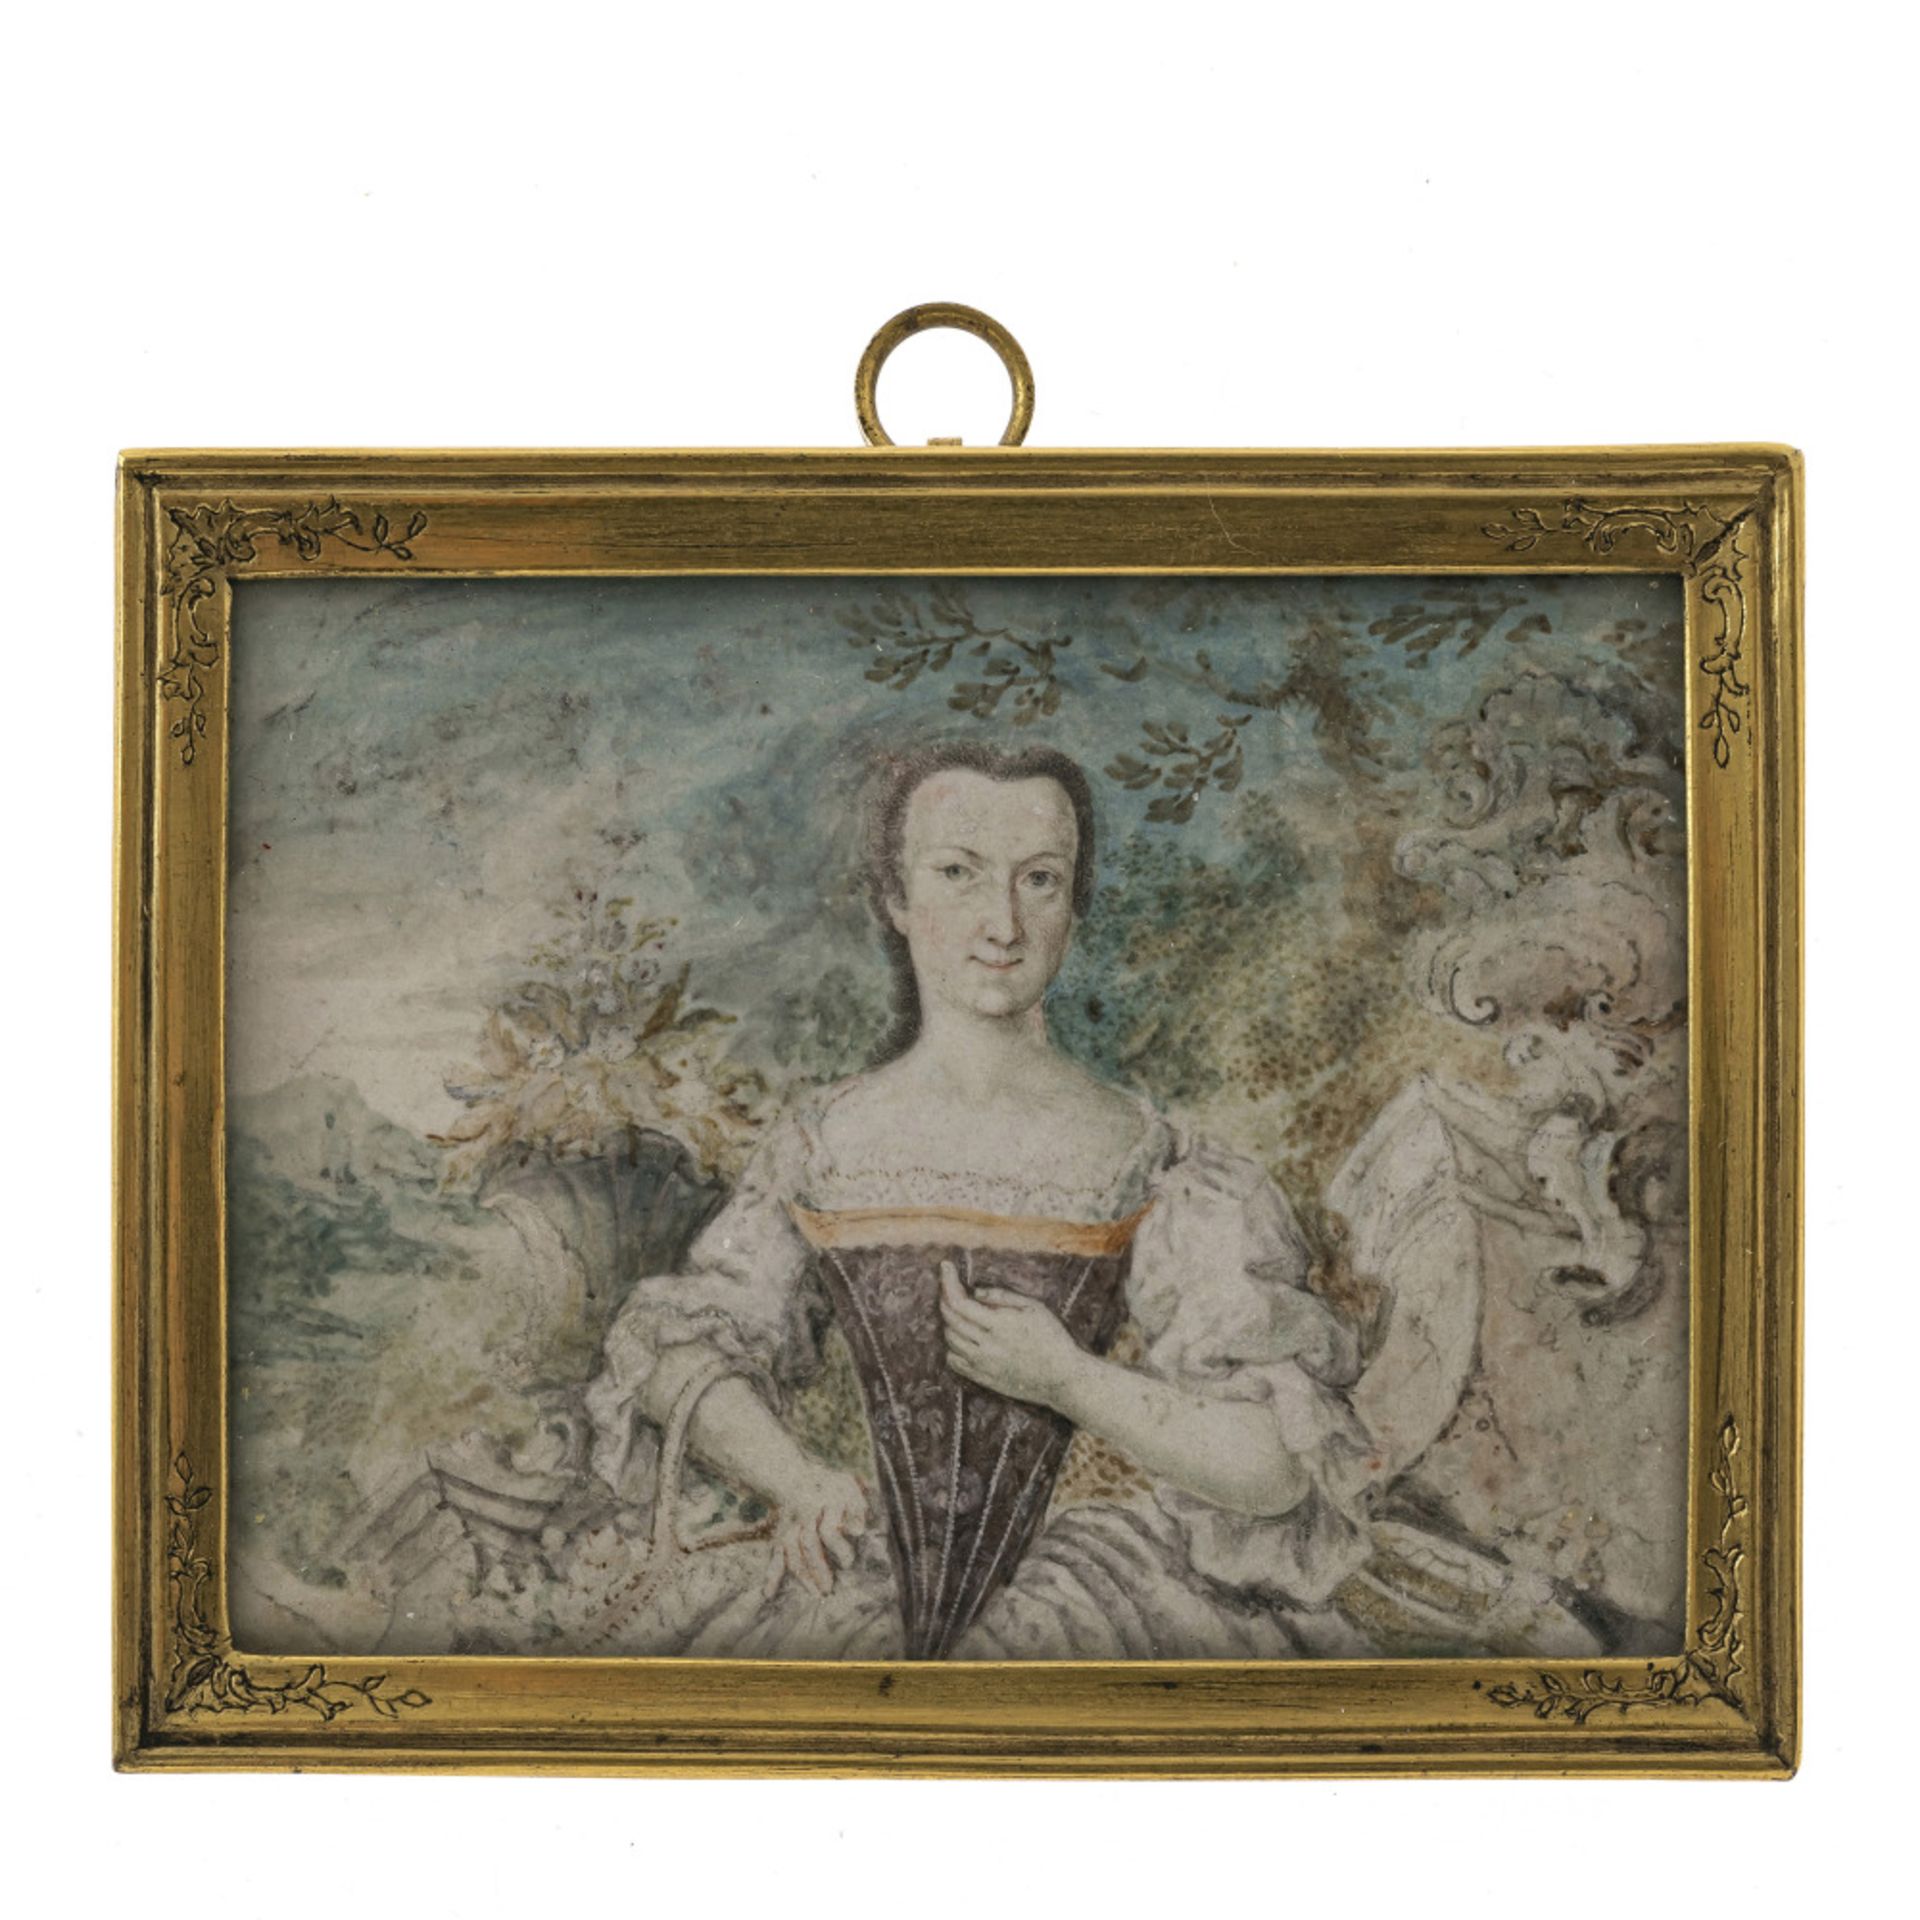 Süddeutsch mid 18th-century - Young lady as gardener